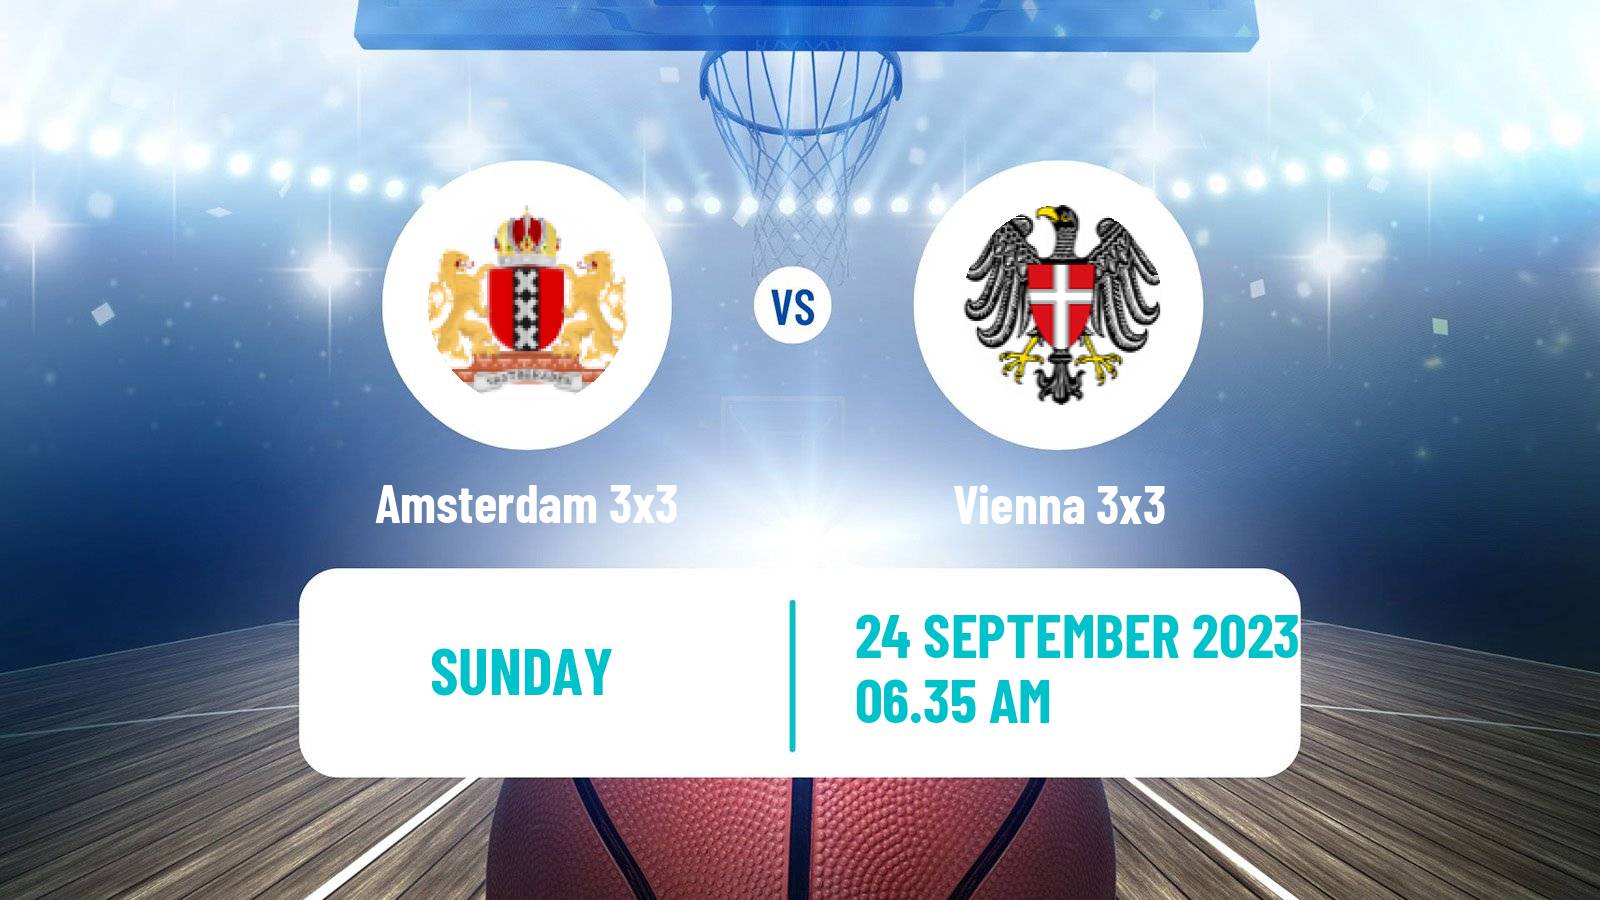 Basketball World Tour Сebu 3x3 Amsterdam 3x3 - Vienna 3x3